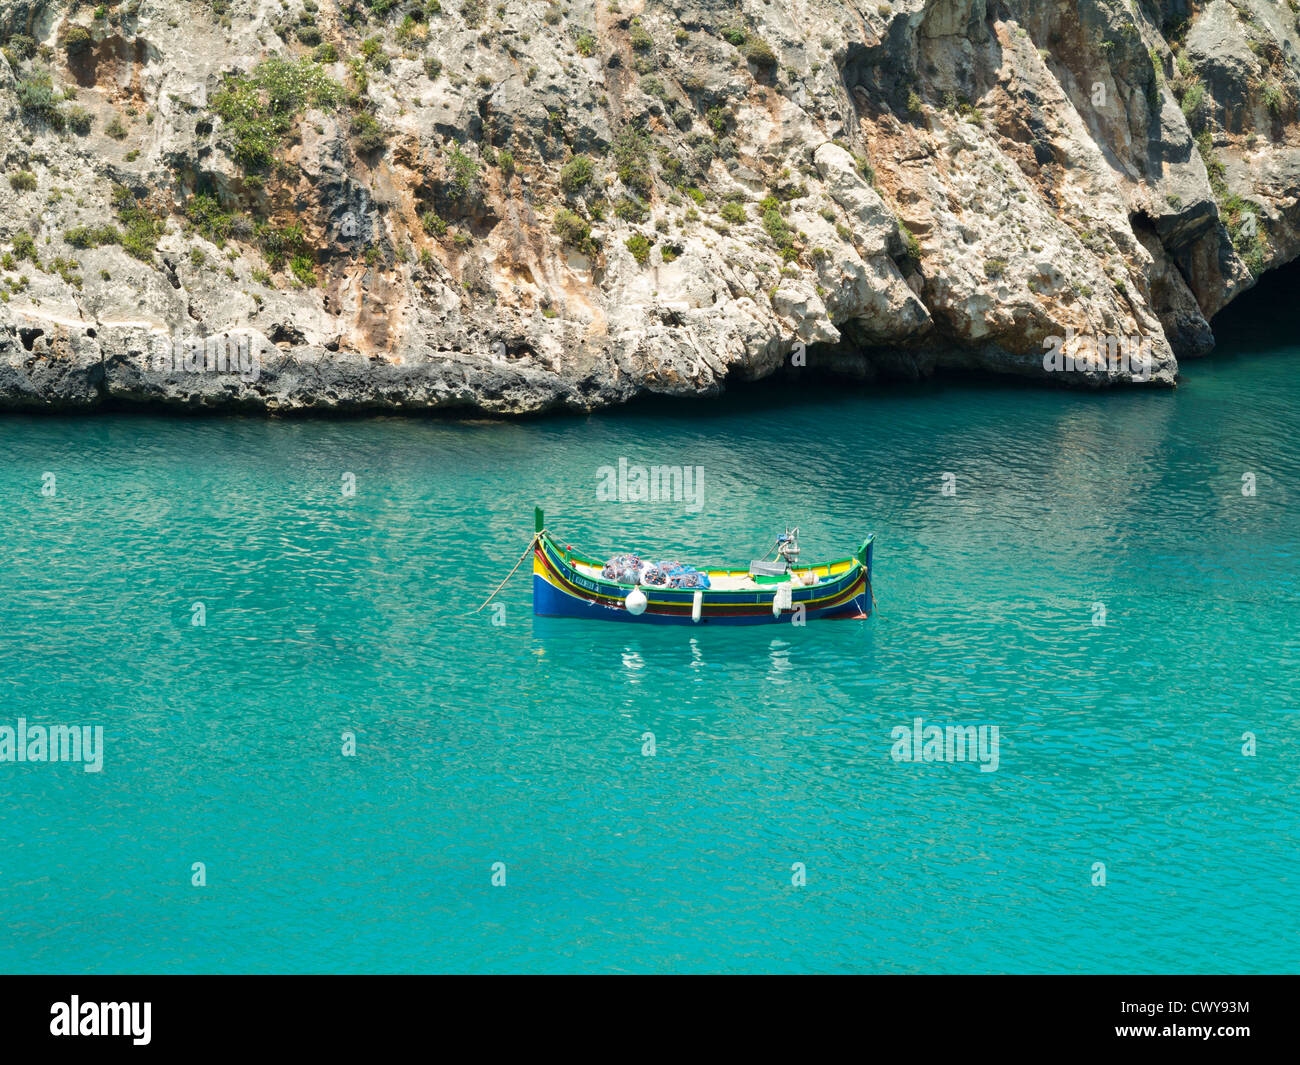 Coastal scene of clear blue water and fishing boat, Island of Gozo, Mediterranean Sea Stock Photo